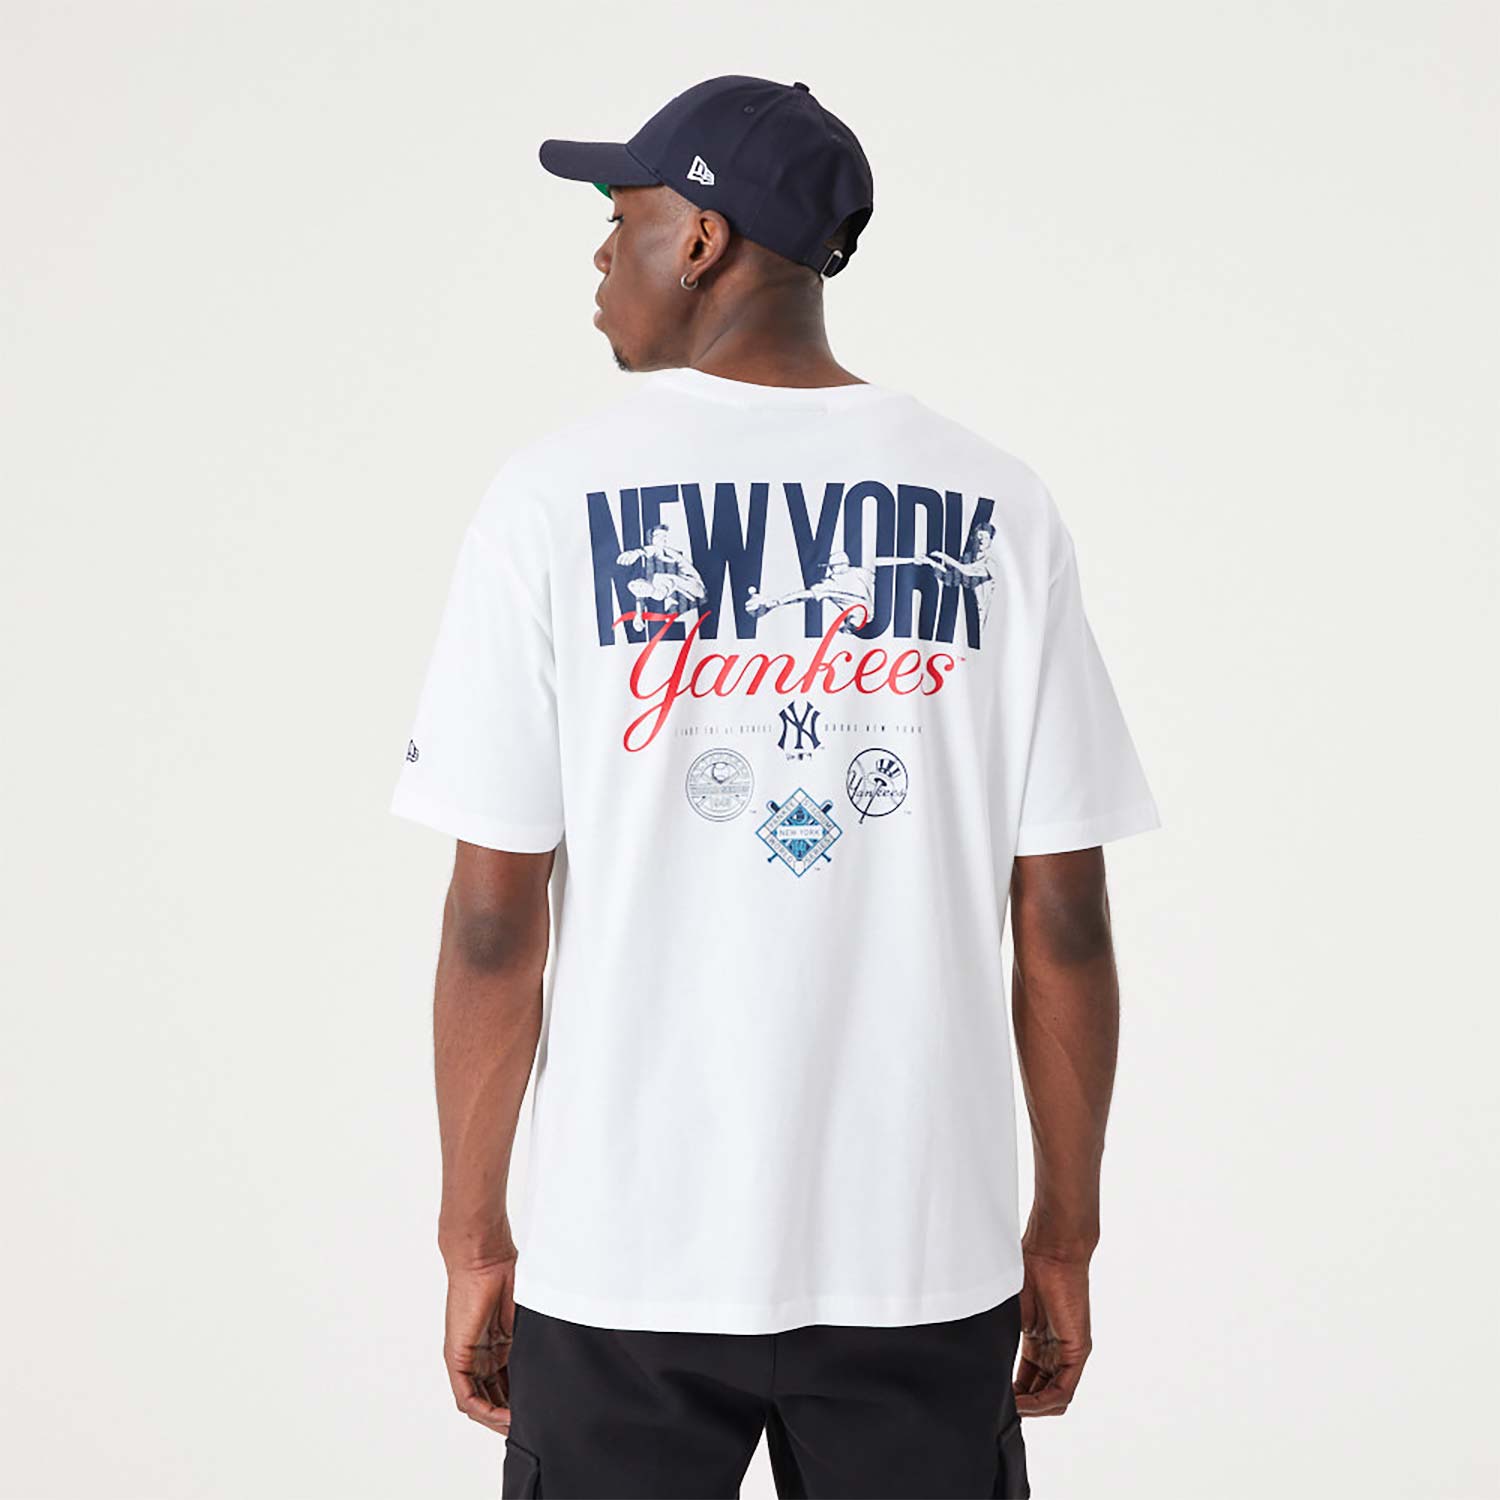 Cheap New York Yankees Apparel, Discount Yankees Gear, MLB Yankees  Merchandise On Sale